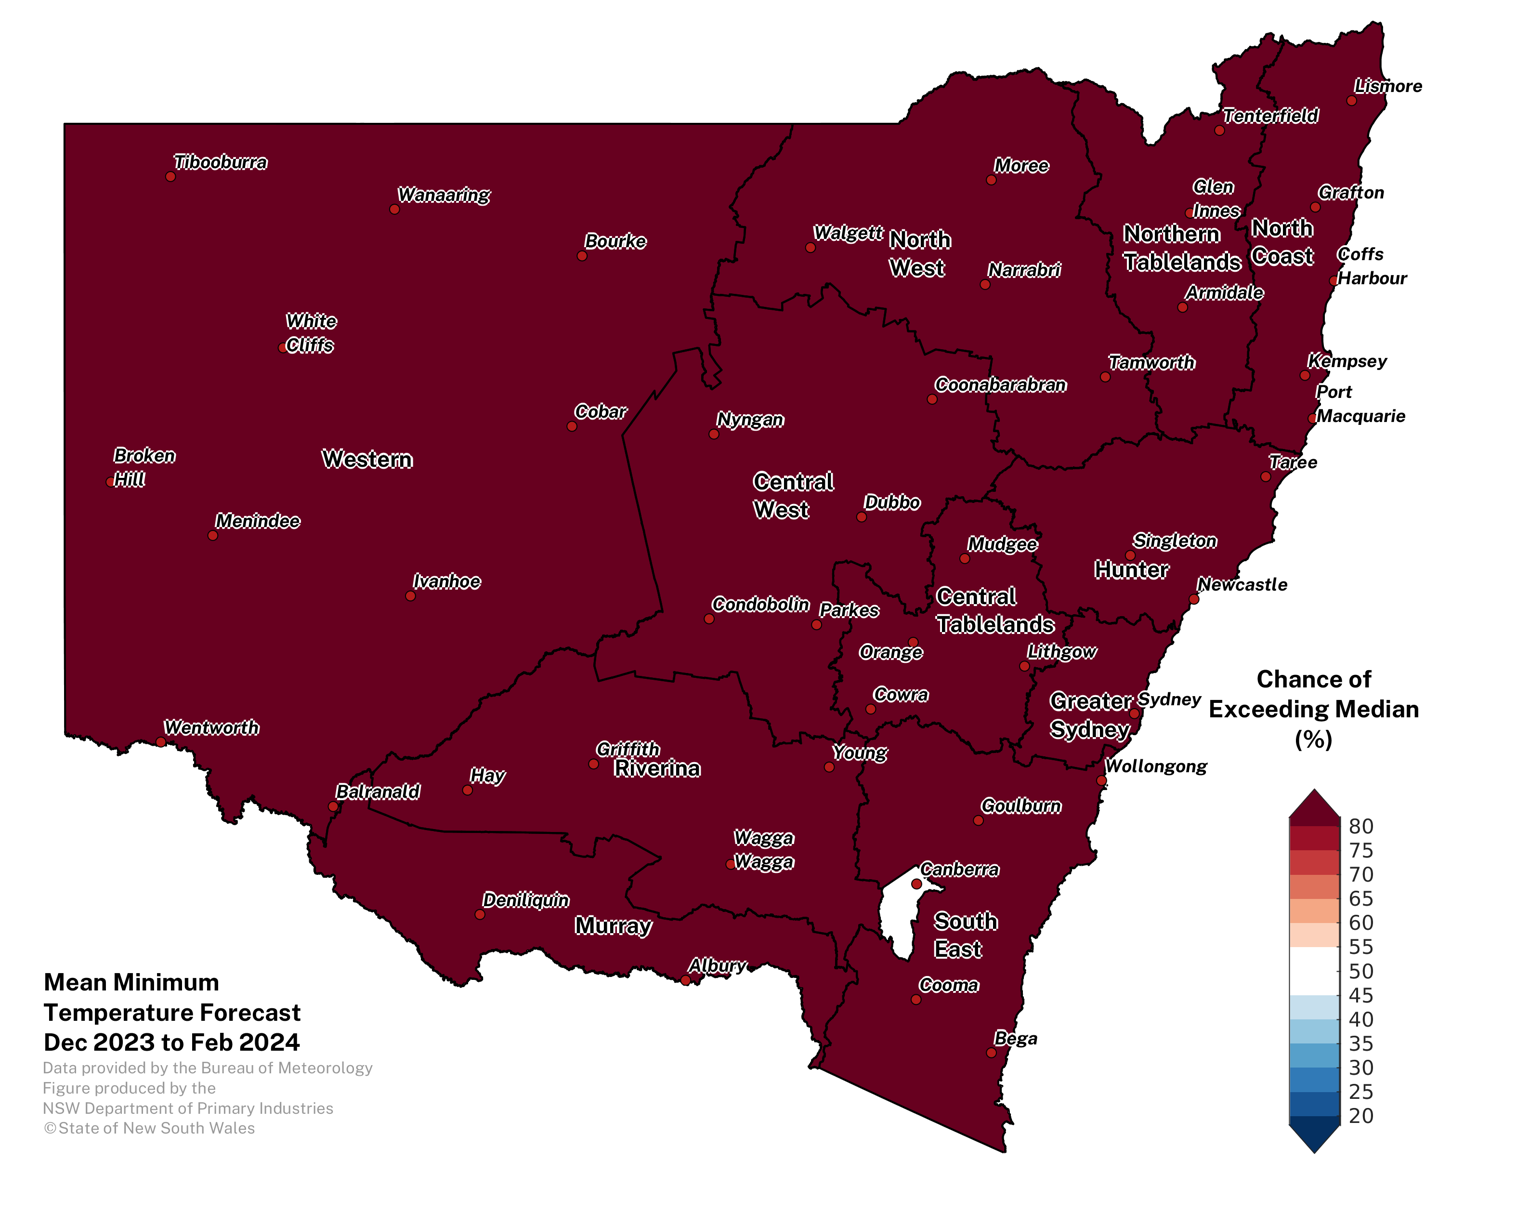 Figure 12. Seasonal average minimum temperature outlook for NSW issued on 30 November 2023 